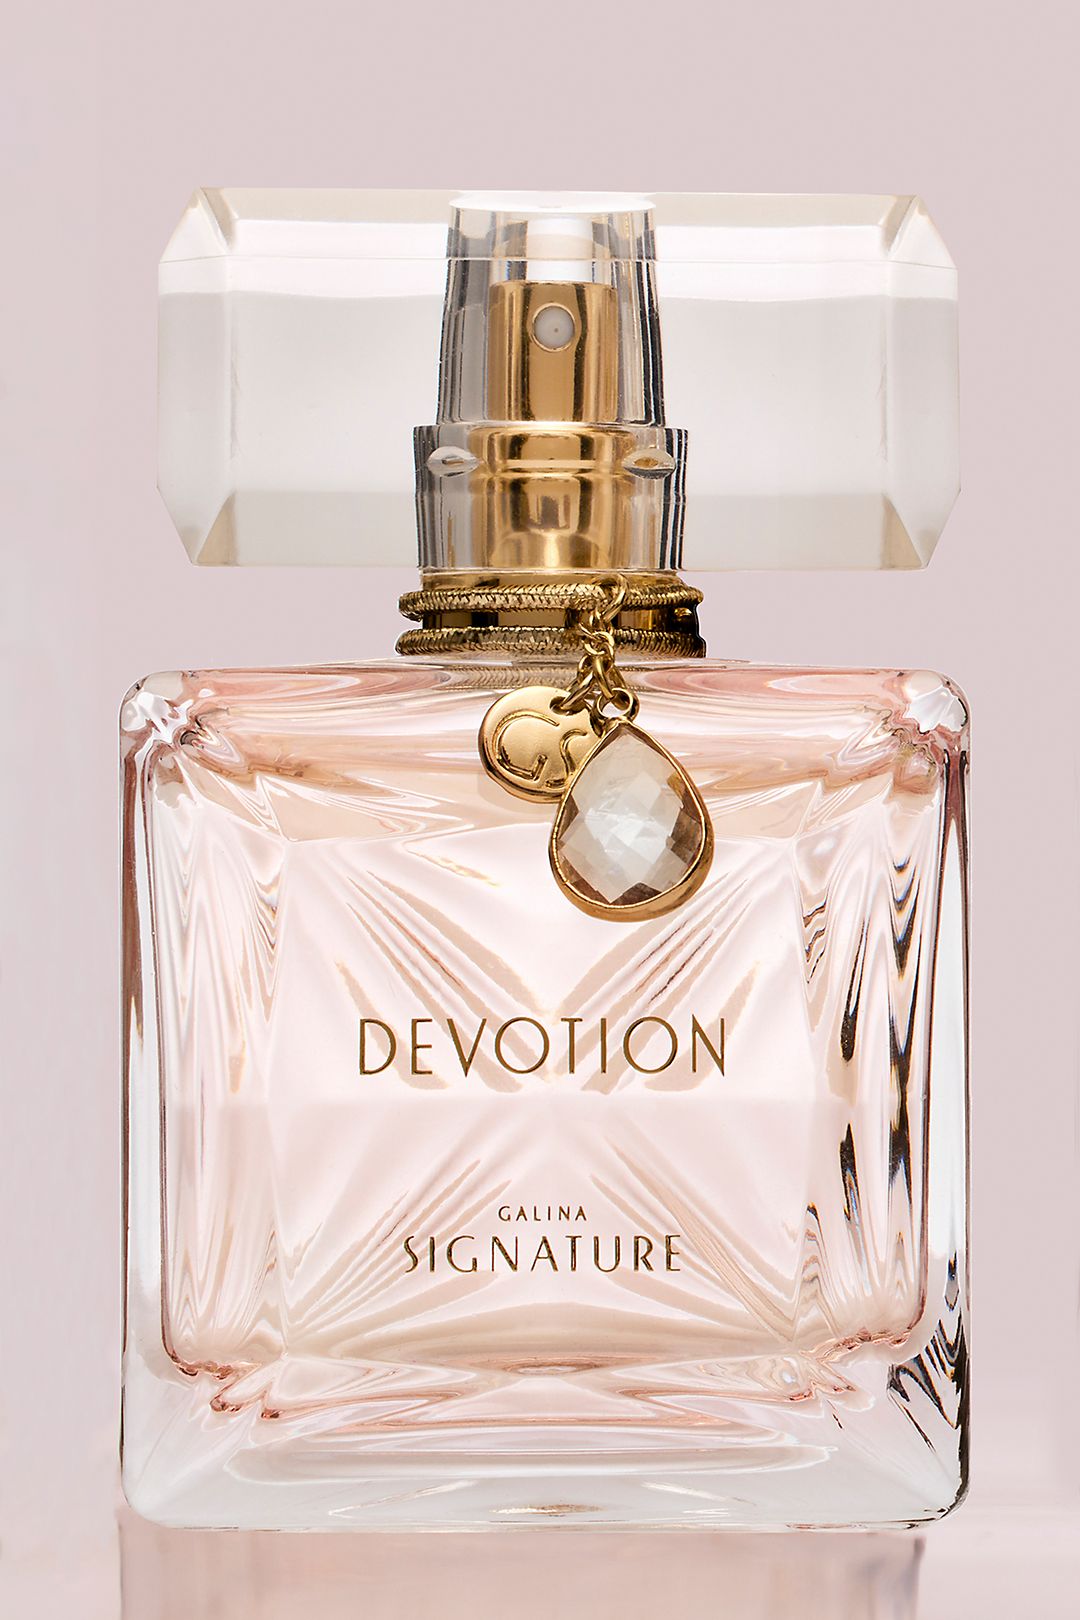 Galina Signature Devotion Fragrance 50ml Image 1